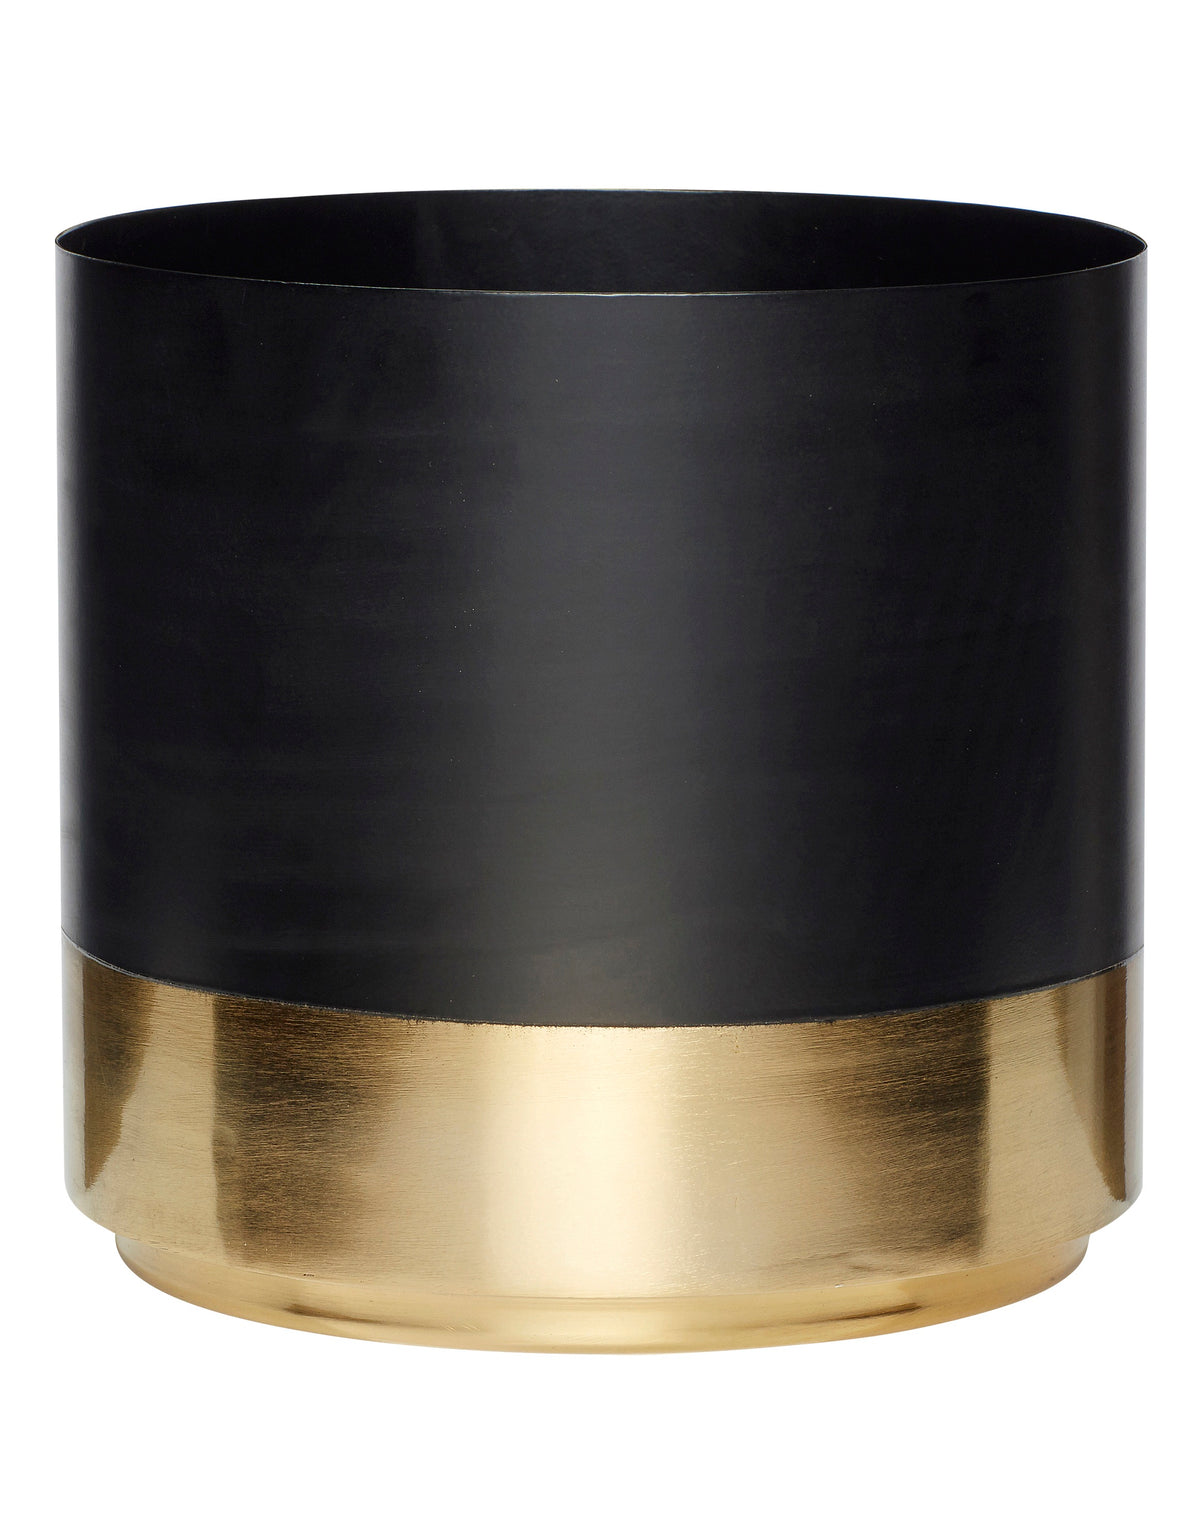 Pot with Brass Base